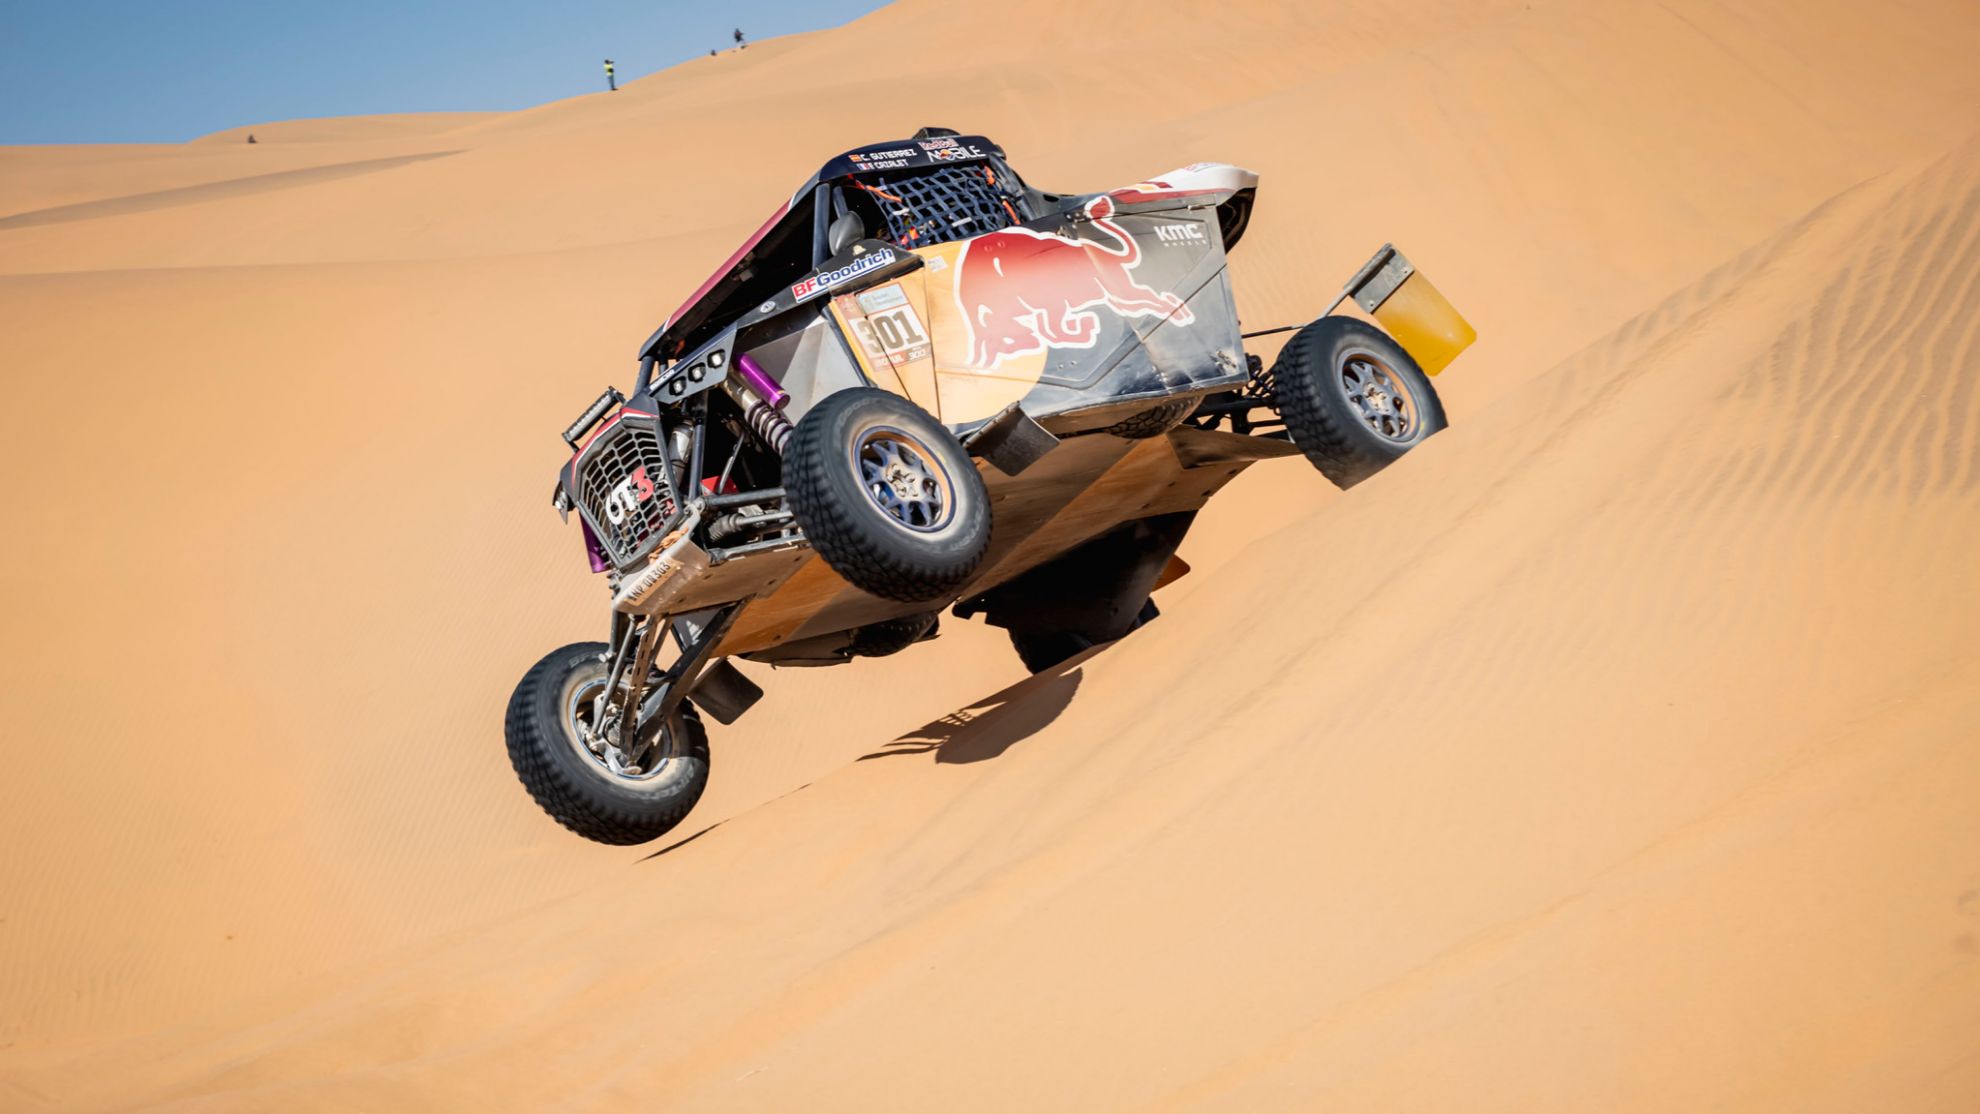 Abu Dhabi Desert Challenge - Mundial W2RC - Mundial de rally-raid - Cristina Gutierrez - Red Bull Off Road Junior Team